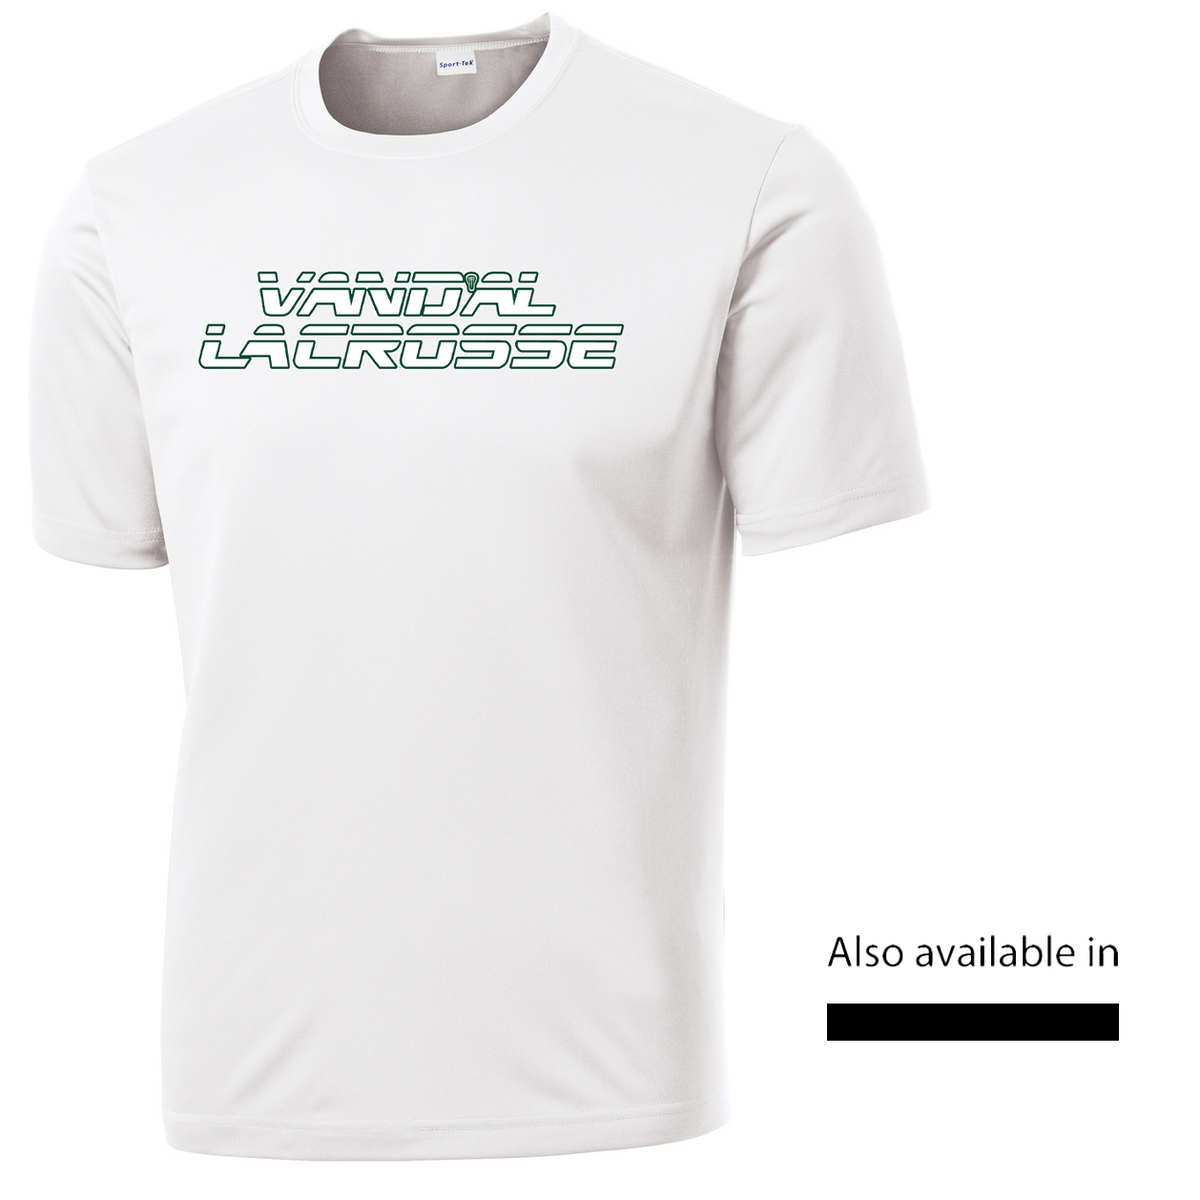 Vand'al Lacrosse Performance T-Shirt